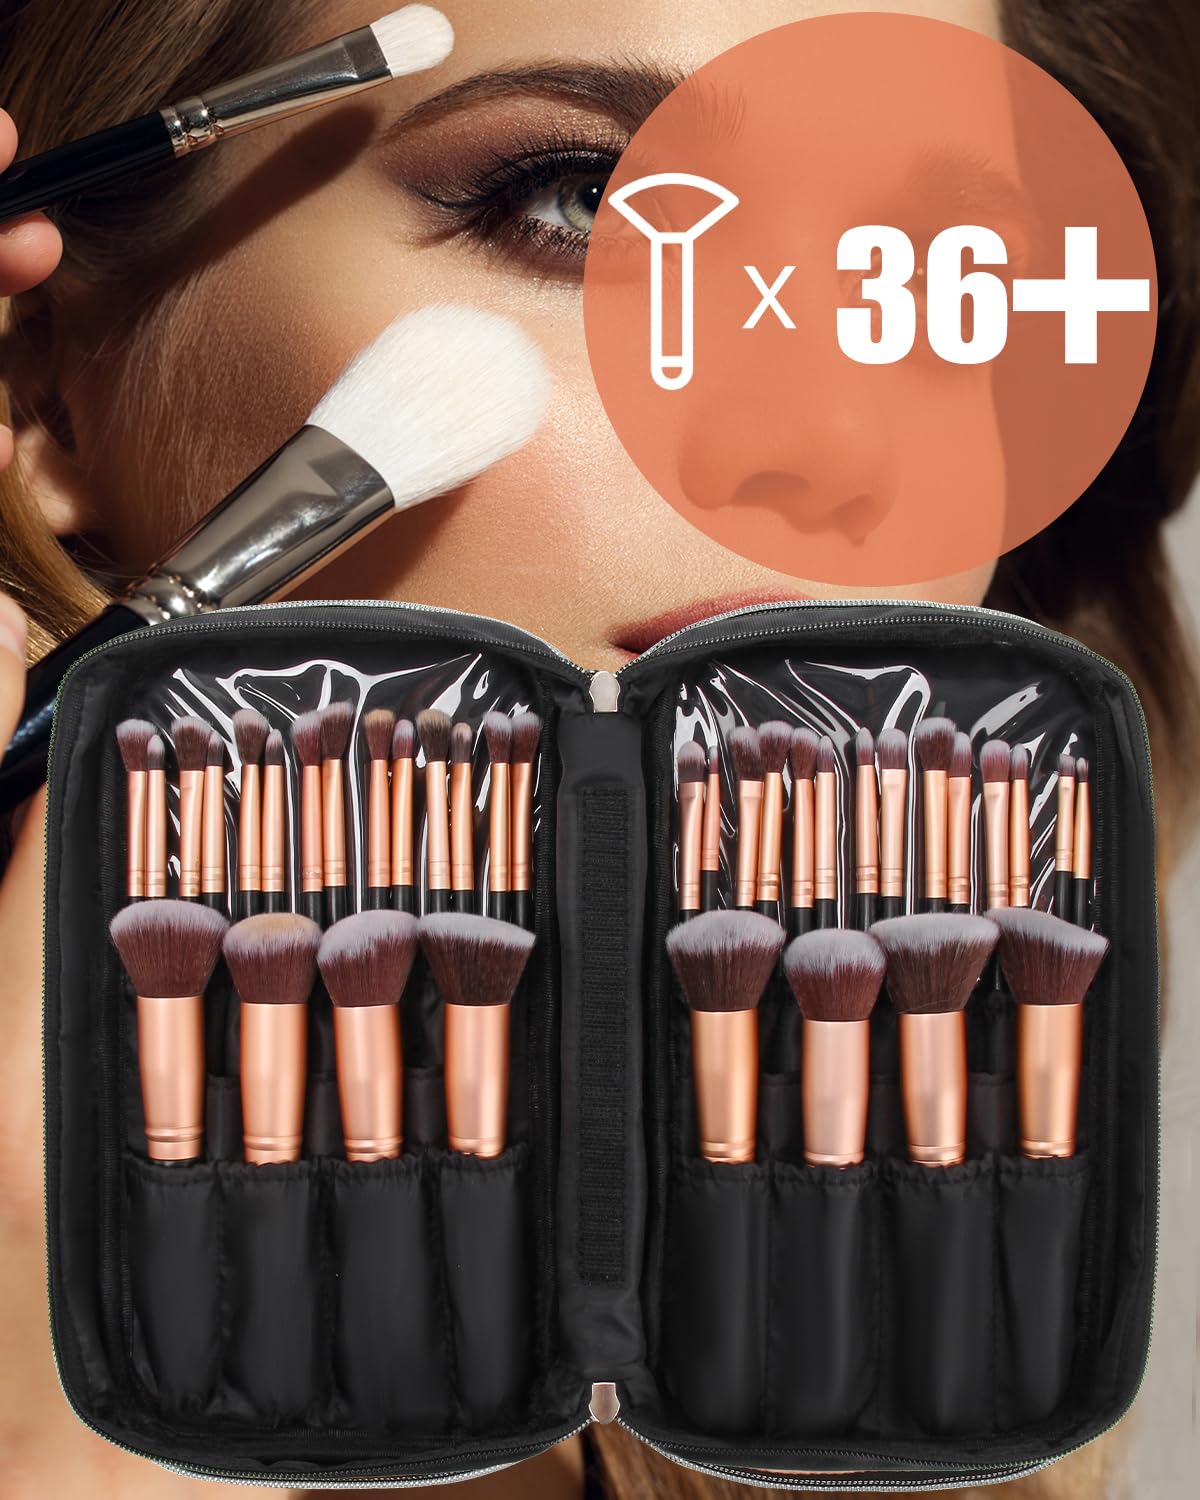 Makeup Brush Bag, Makeup Brush Organizer Cosmetic Bags Makeup Artist Case with Belt Strap Holder Multi functional Cosmetic Bag Makeup Handbag for Travel & Home Gift (Black)